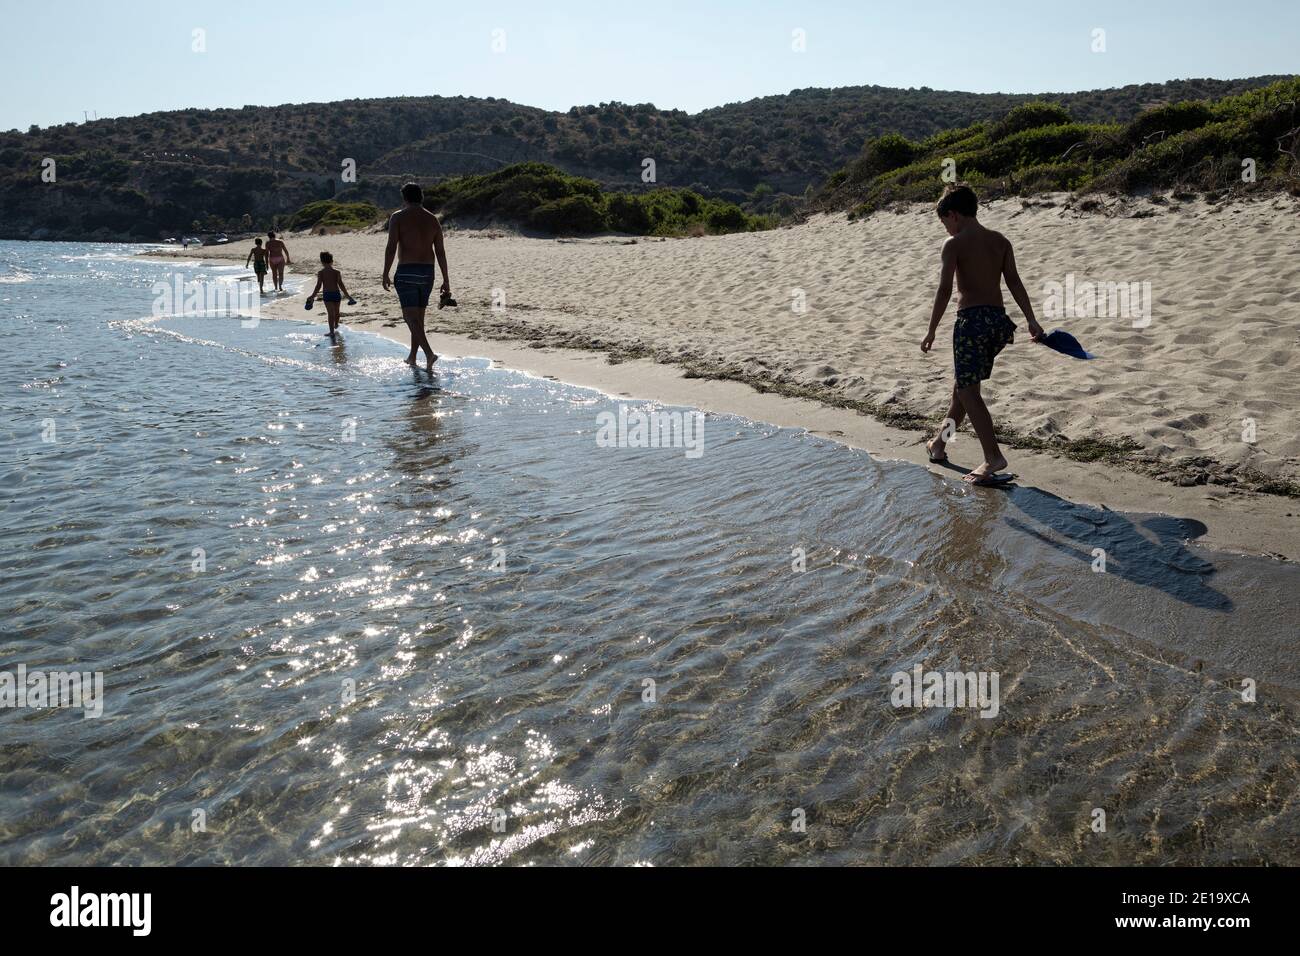 Valtaki beach in Gytheio, Peloponnese region, Greece on July 29, 2020. / Παραλία Βαλτάκι, Γύθειο, Πελοπόννησος, 29 Ιουλίου 2020. Stock Photo